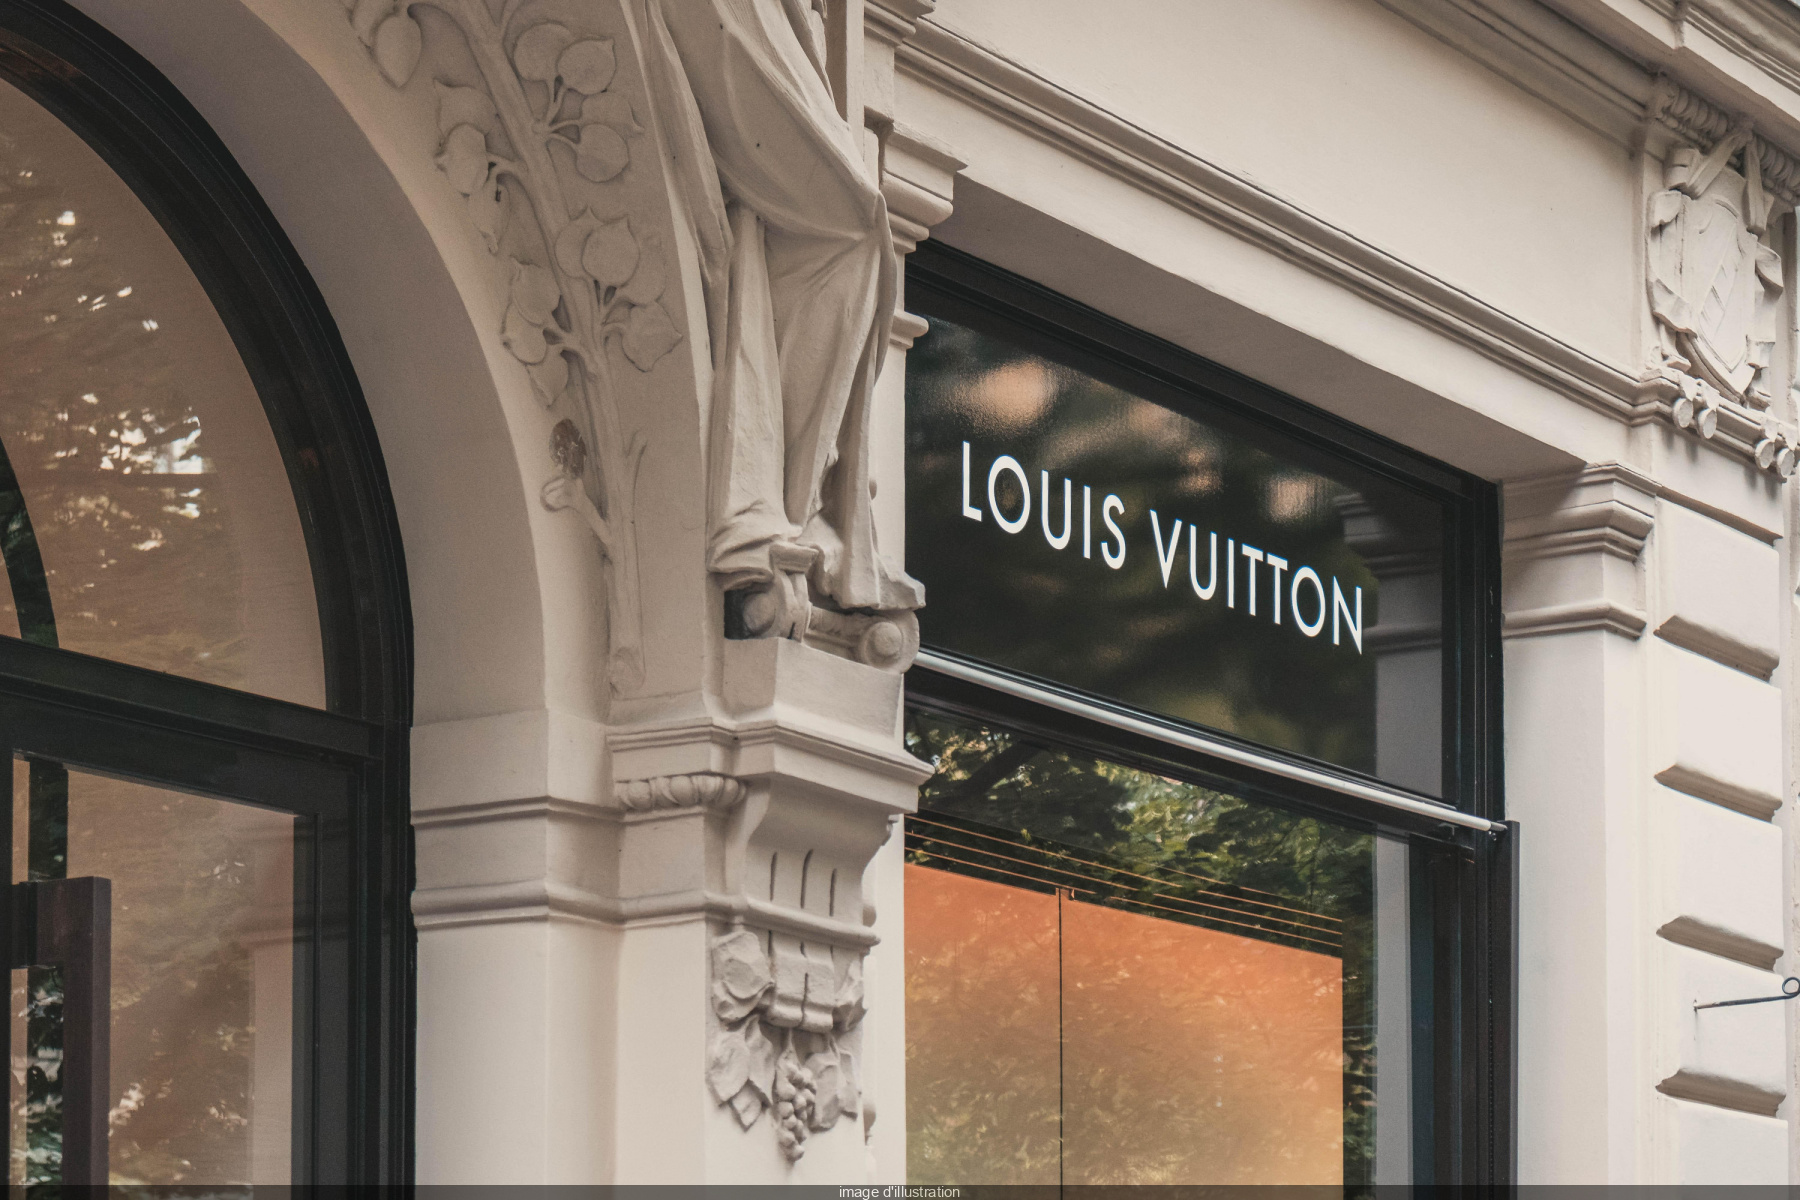 Louis Vuitton publishes fashion photo album - LVMH